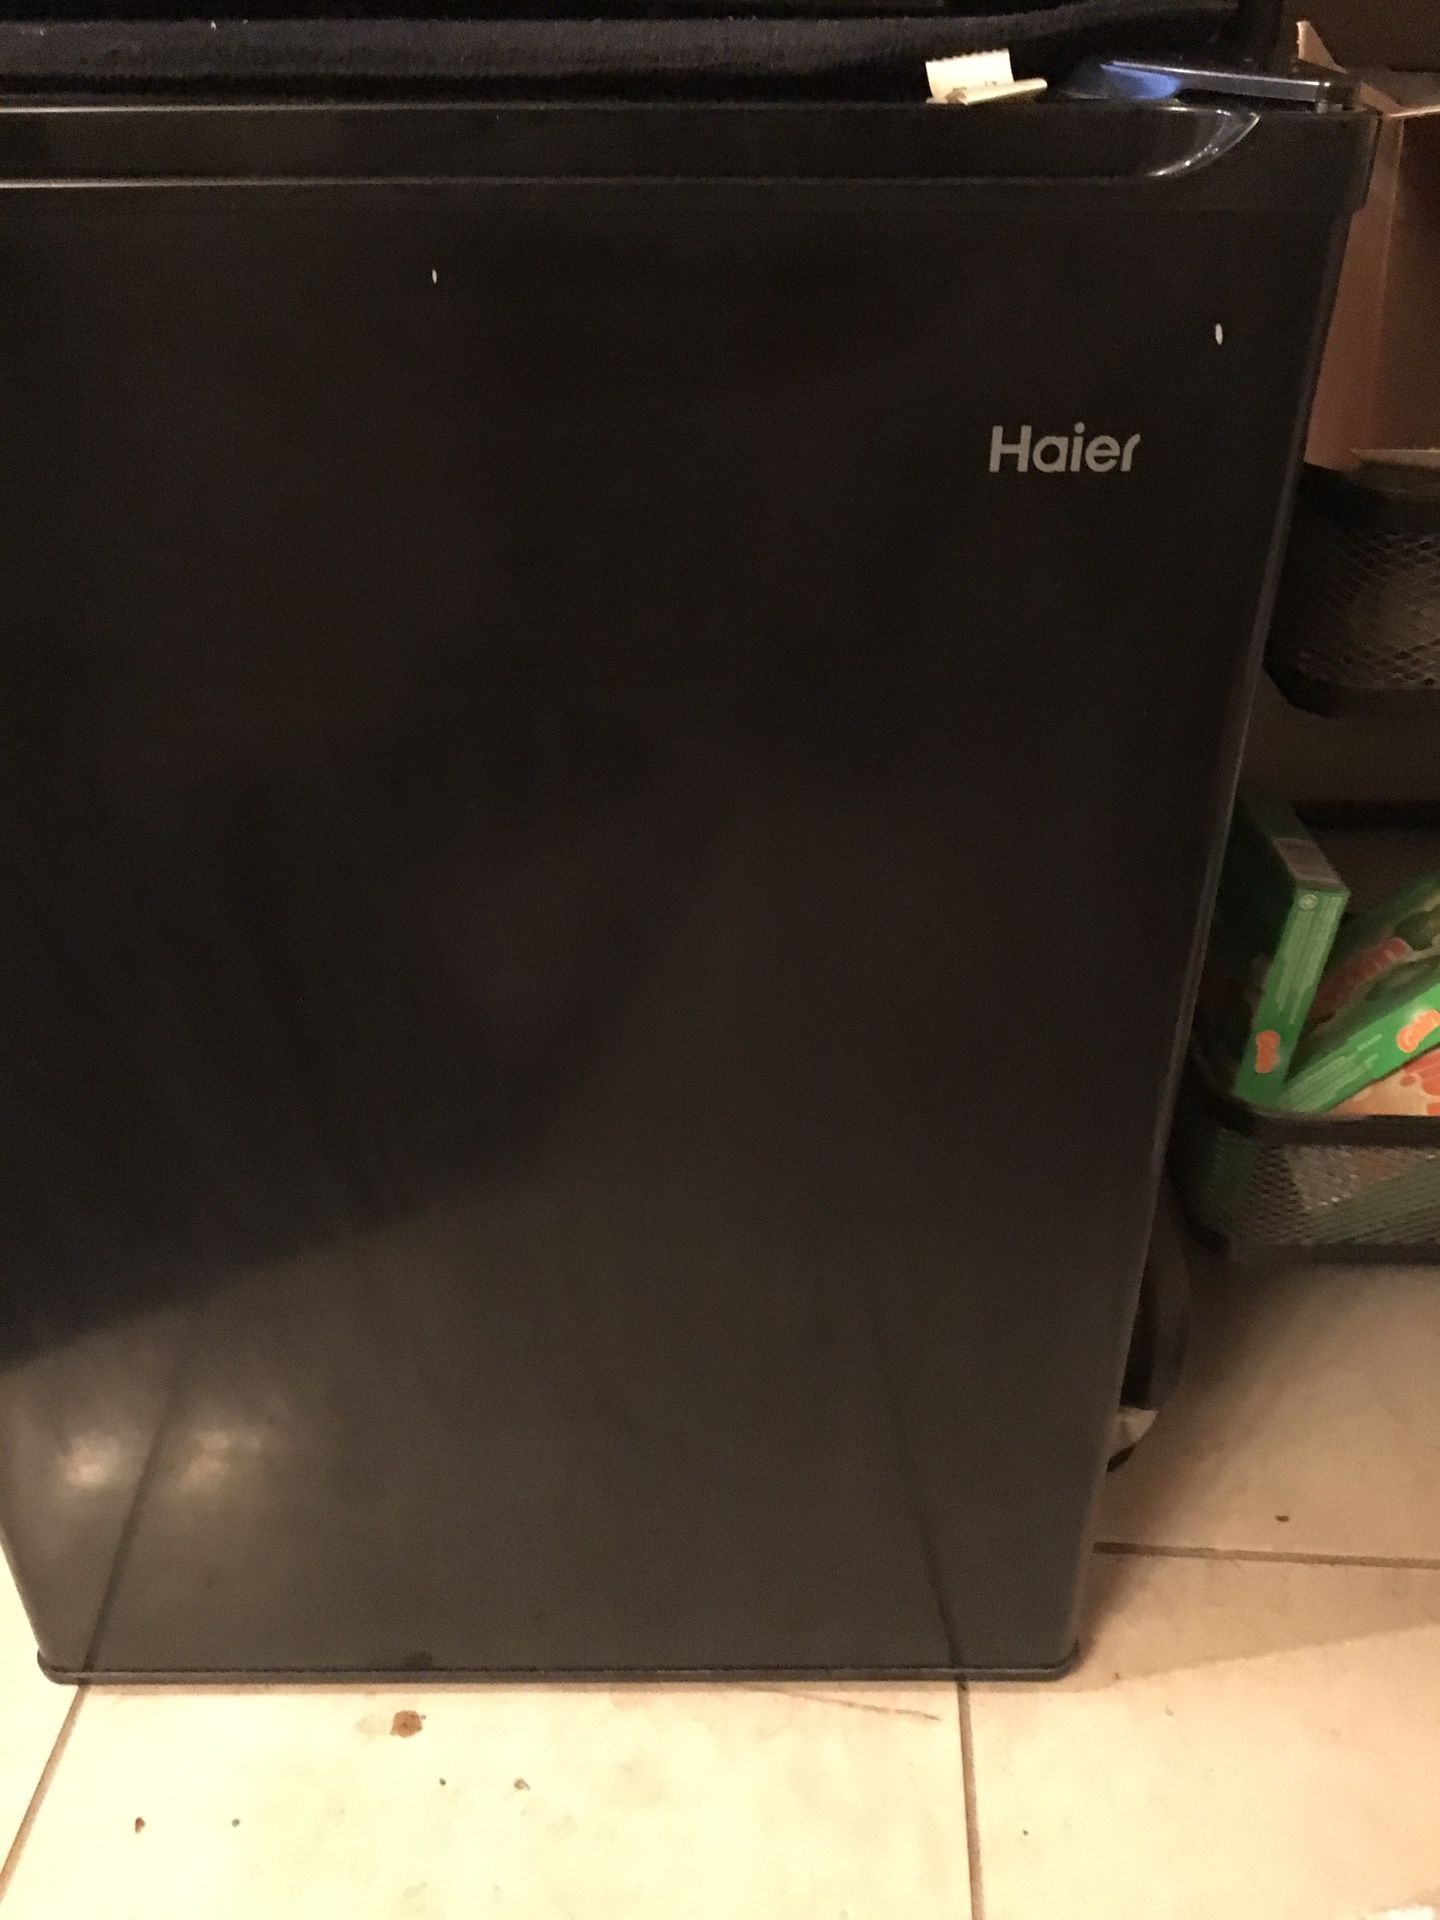 Haier mini fridge, black